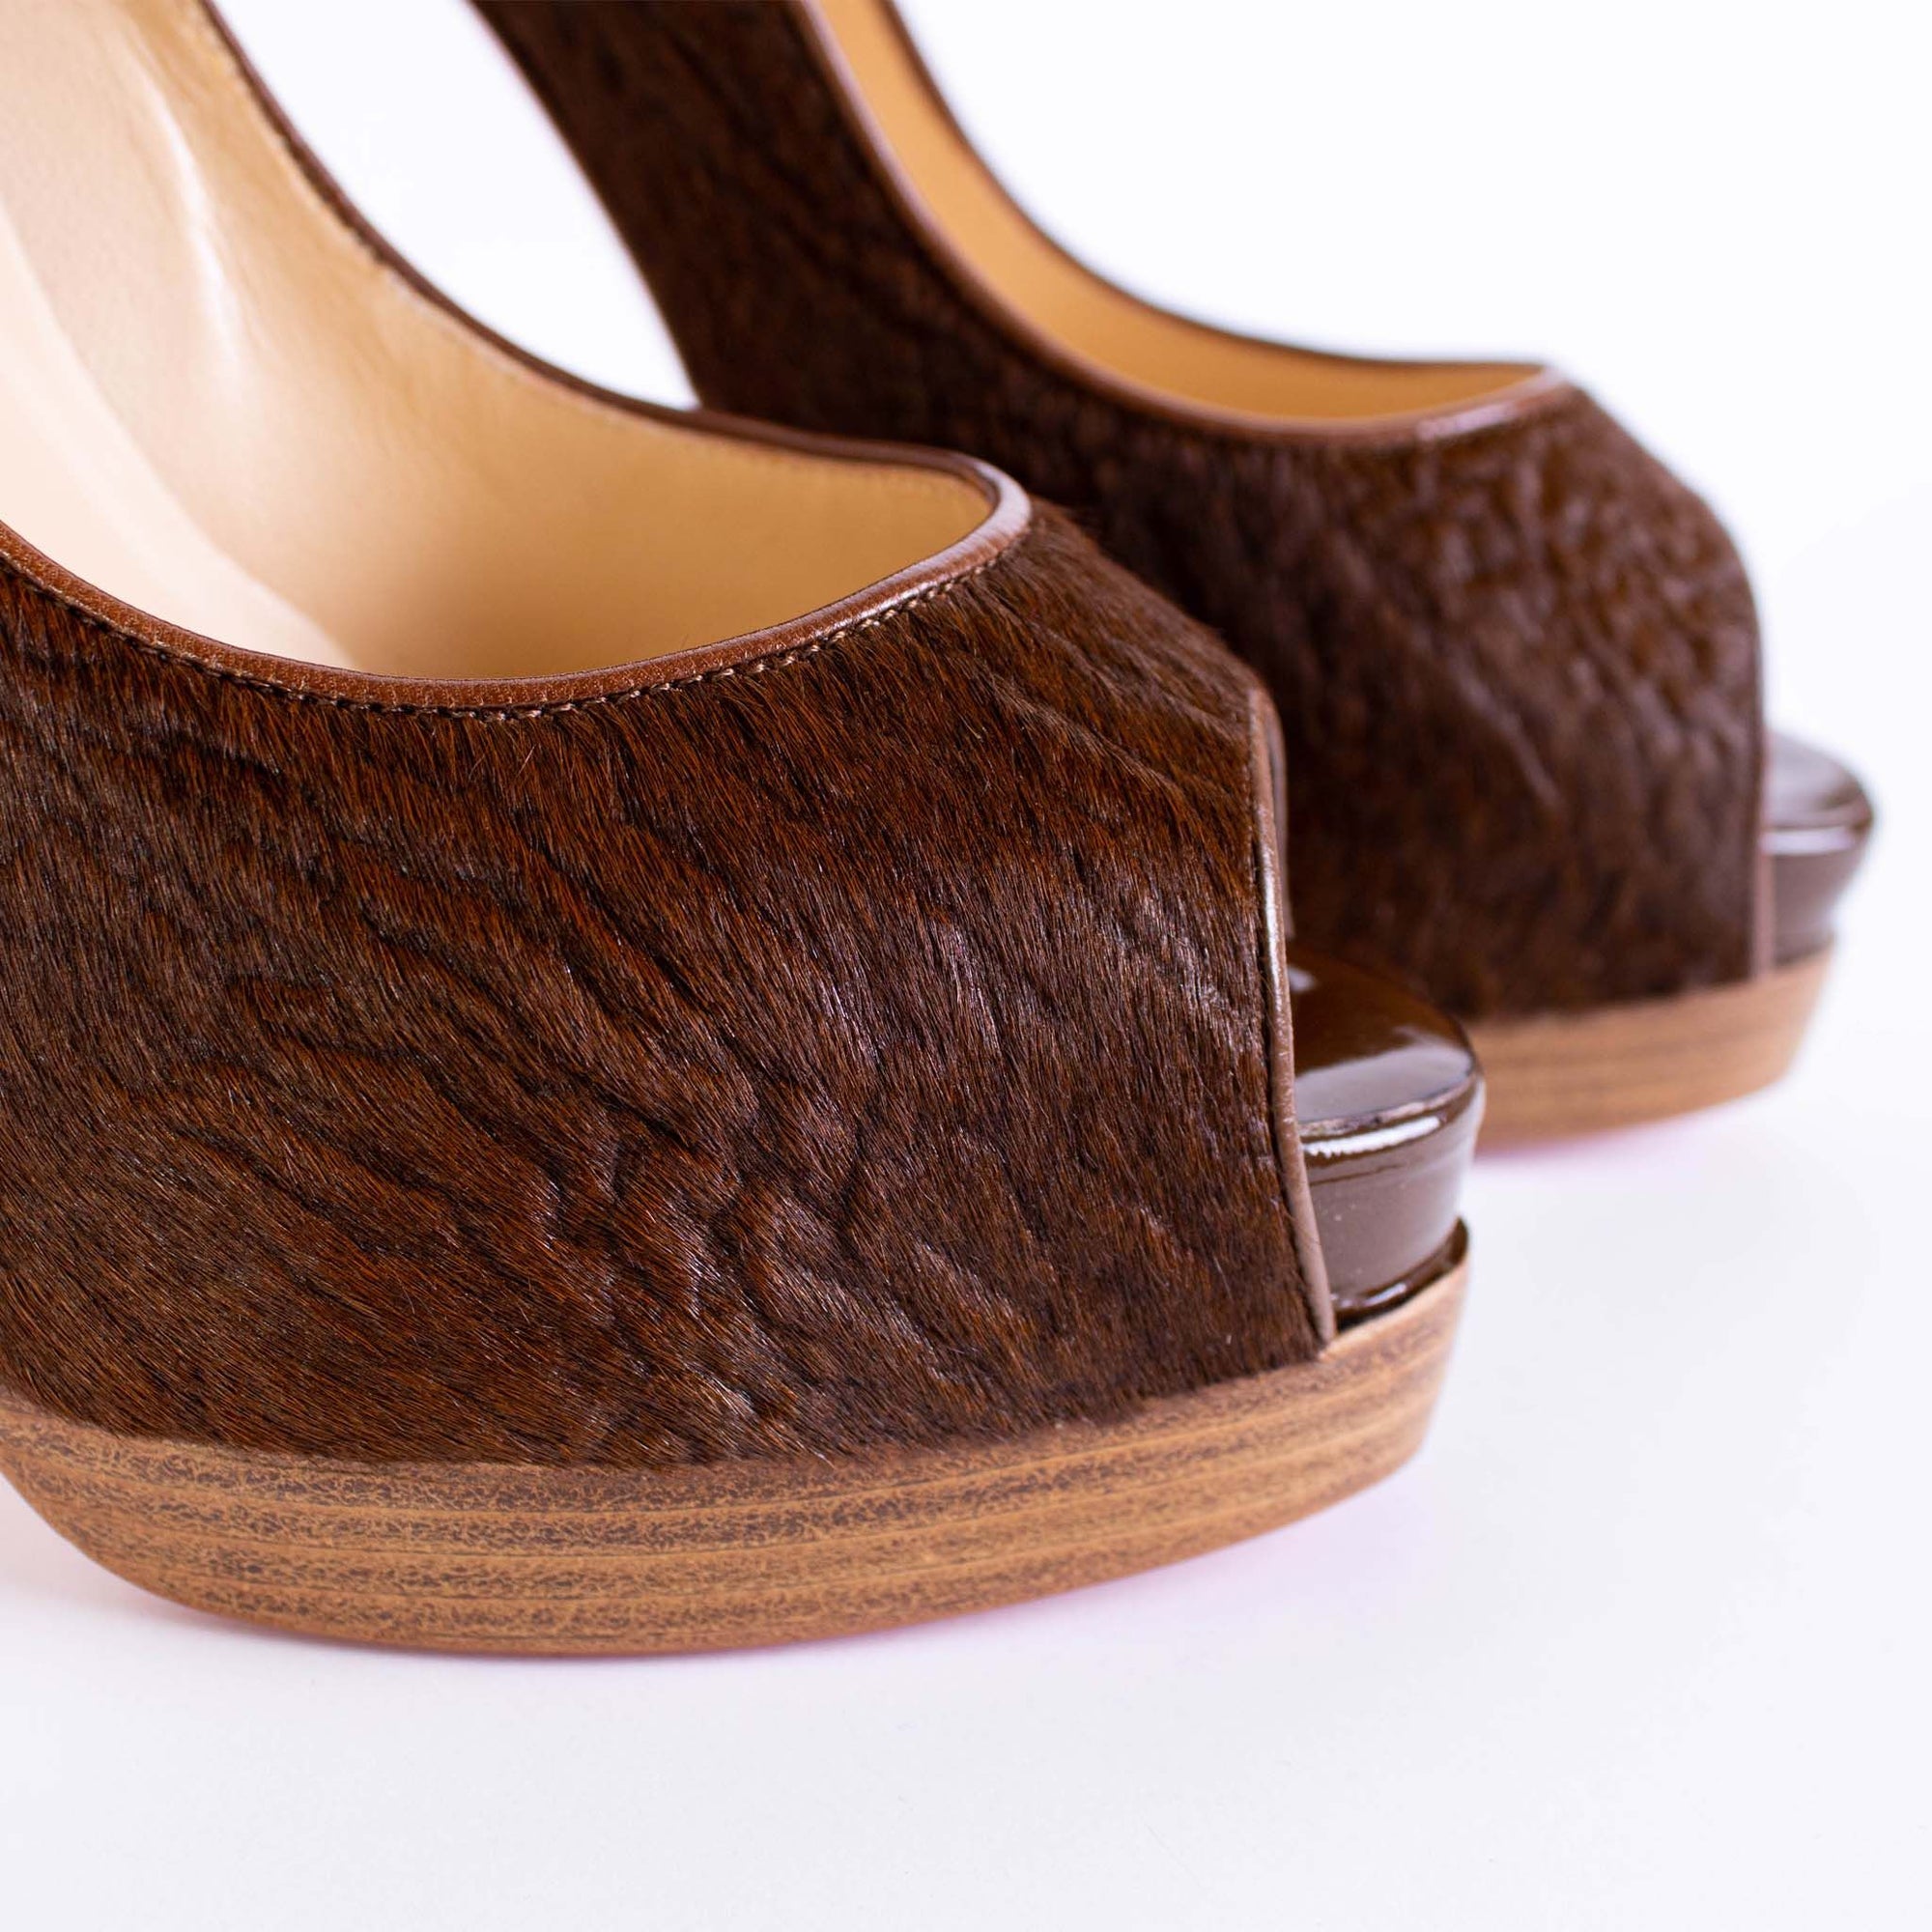 Elegant Open Toe Leather Pumps with Wooden Heel